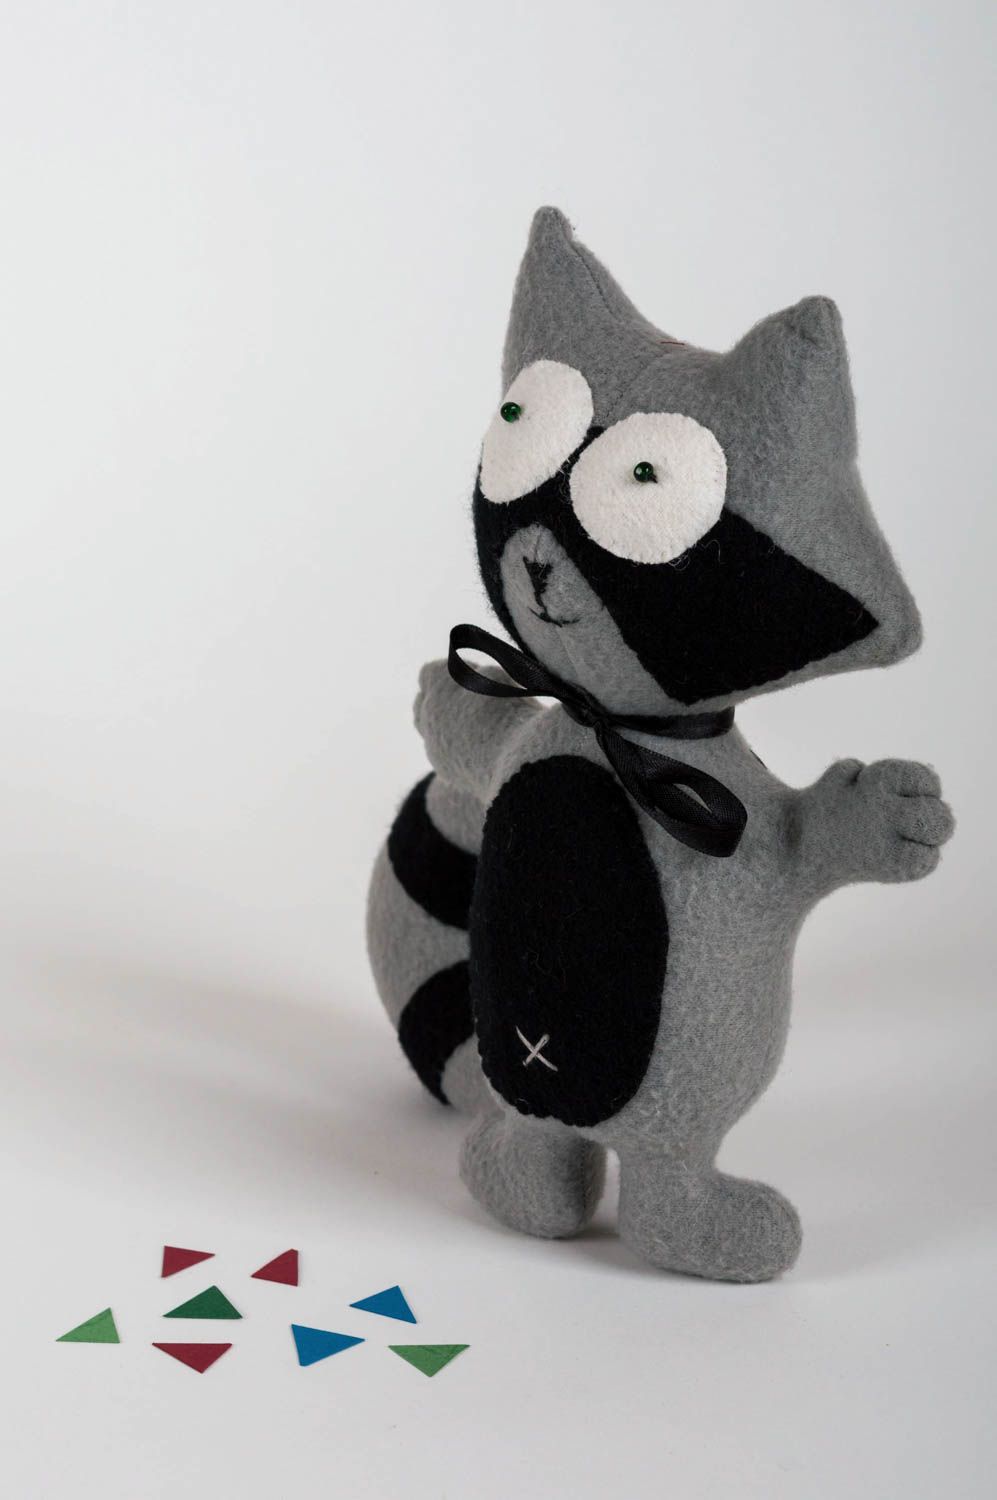 Handmade fabric soft toy stylish raccoon interior design and kids gift ideas photo 1